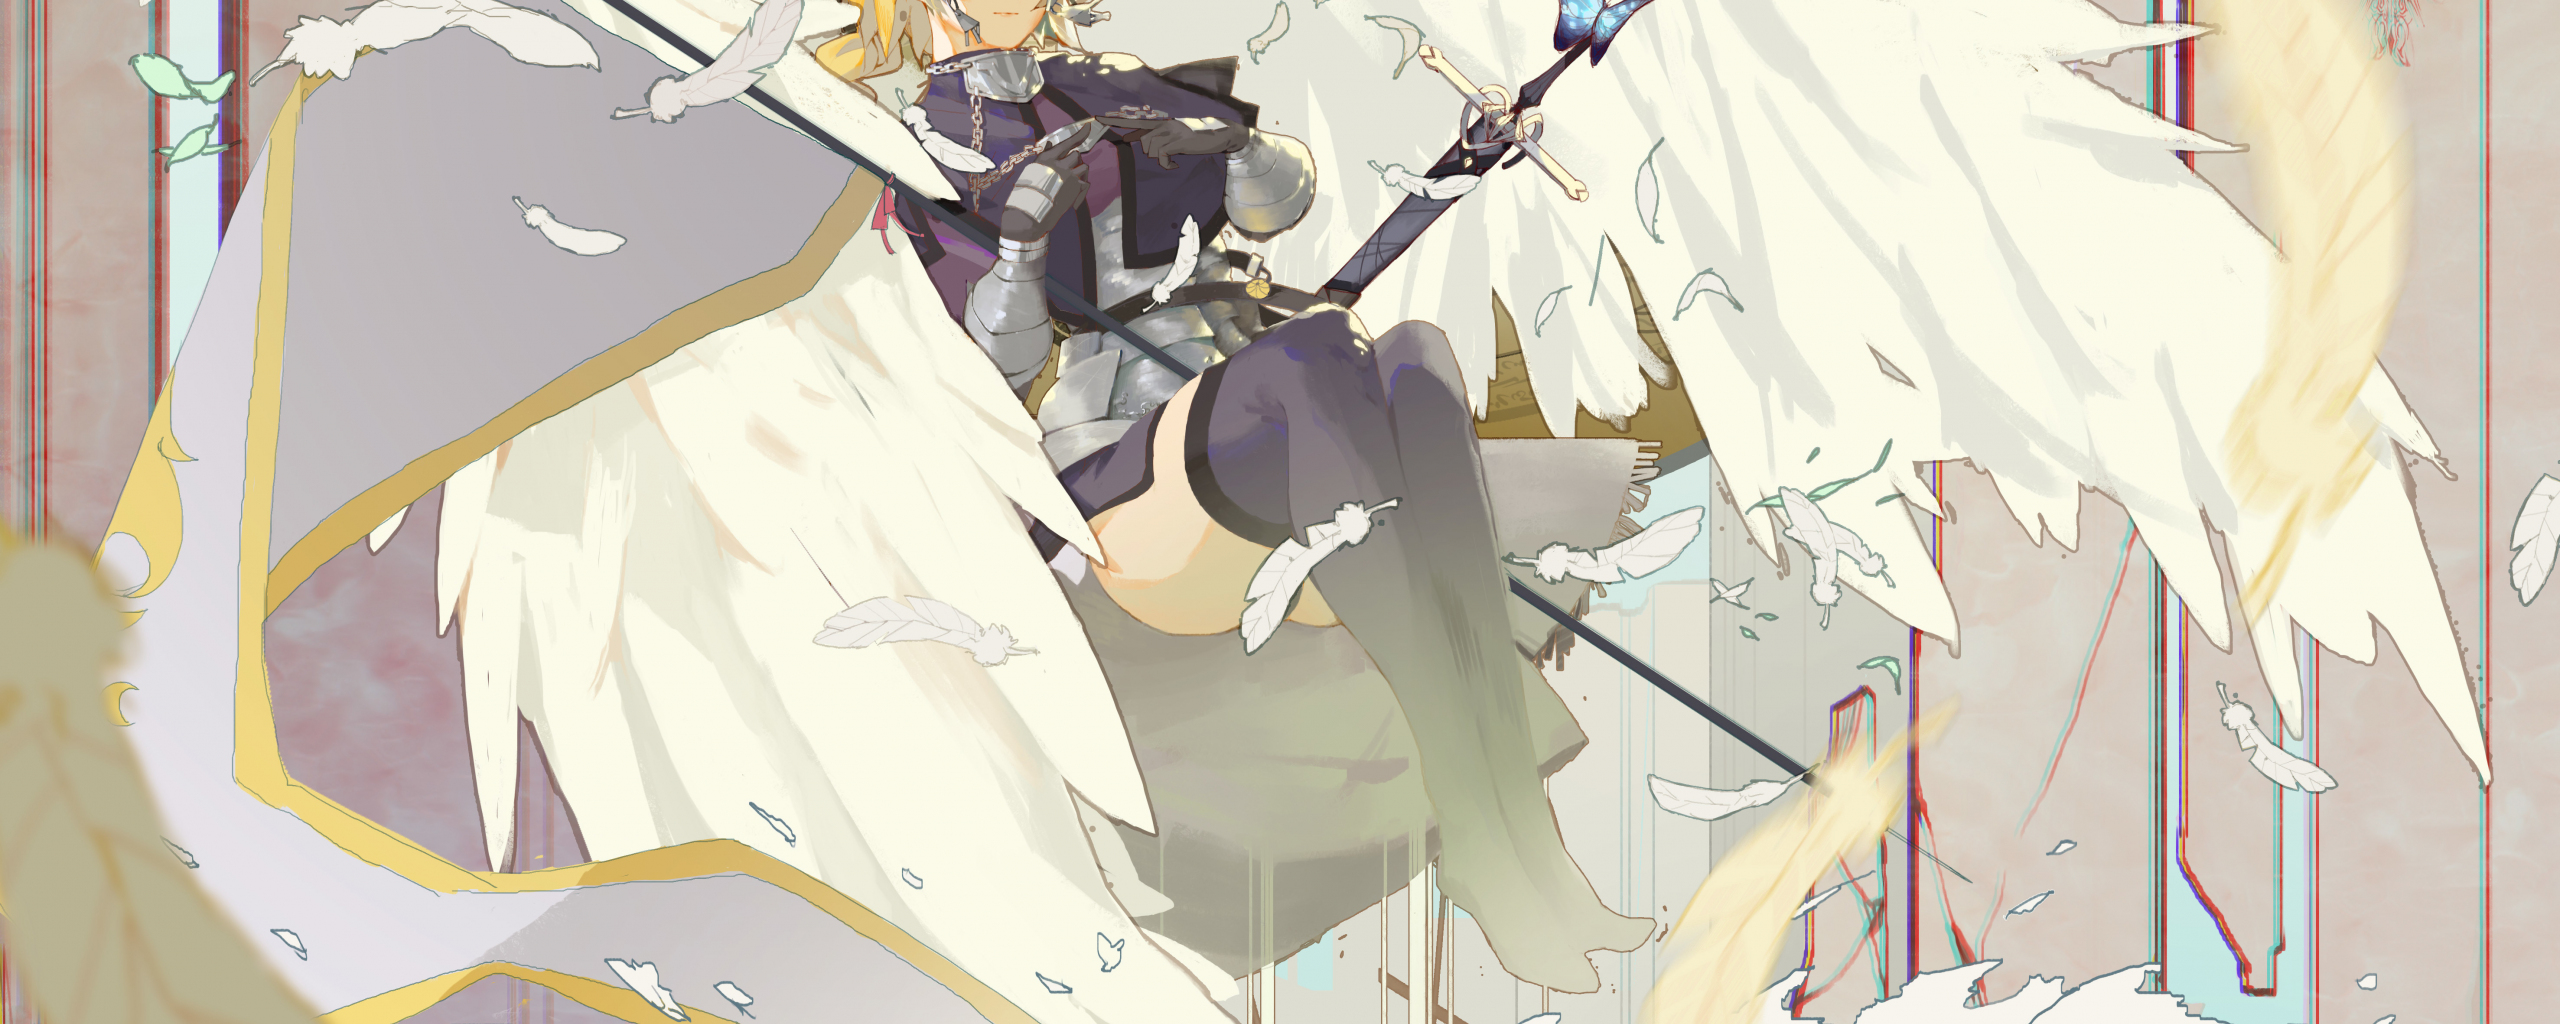 Desktop Wallpaper Ruler Fate Apocrypha Anime Girl 5k Hd Image Picture Background C6cb8e